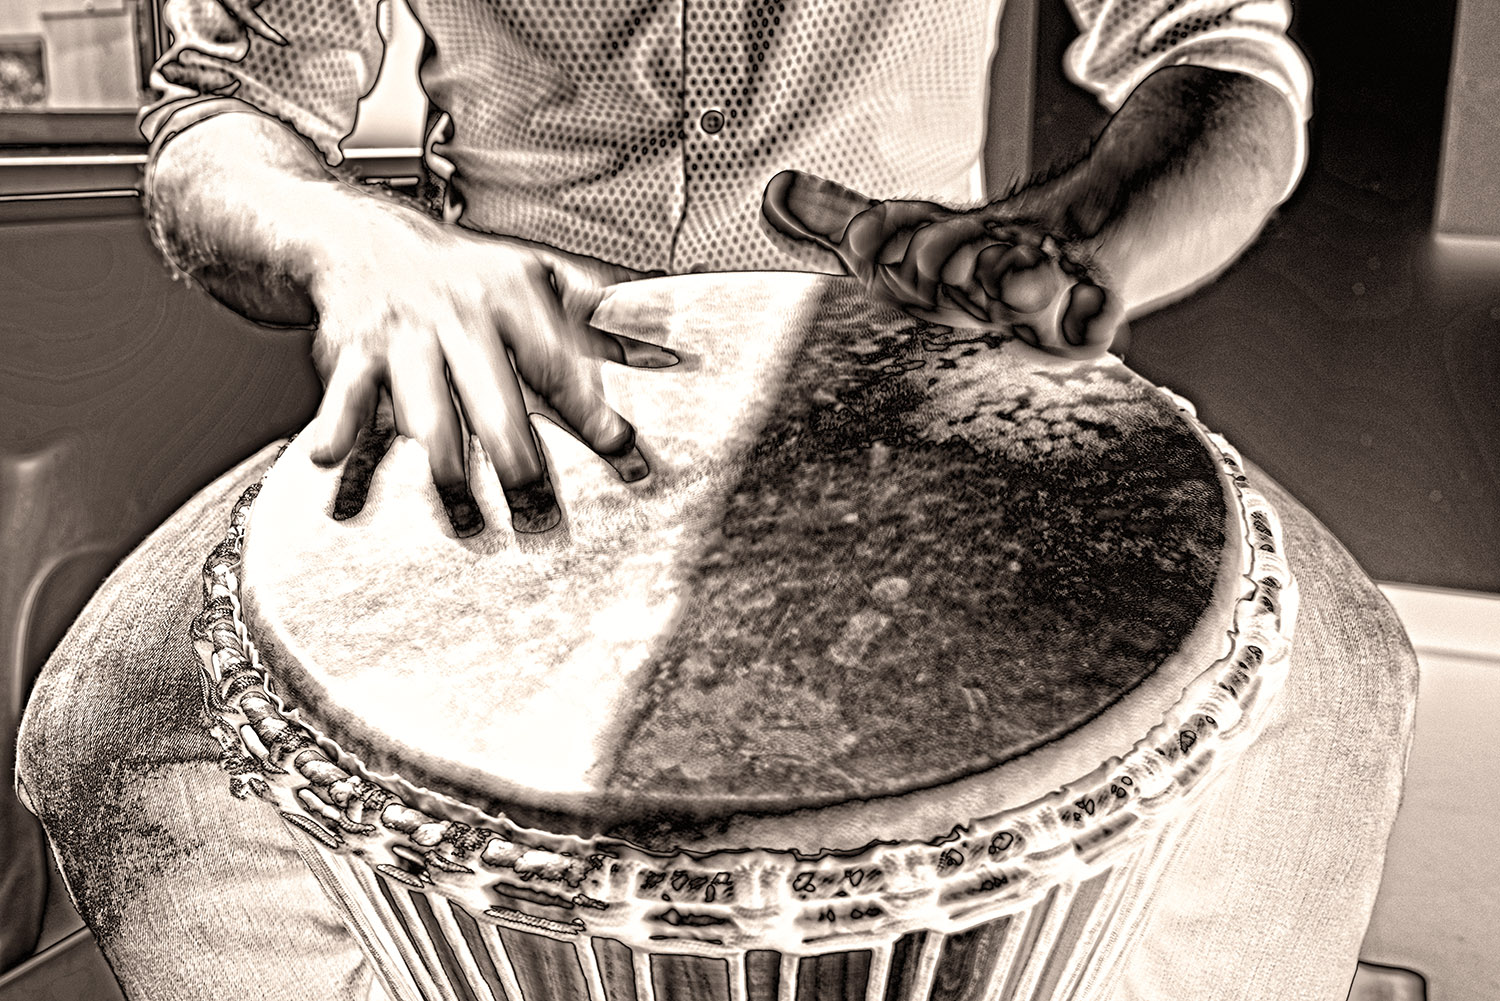 Musician_Drummer_Hand_Drum_Djembe_Percussion_Instrument_Blur_Monochrome_Sepia.jpg